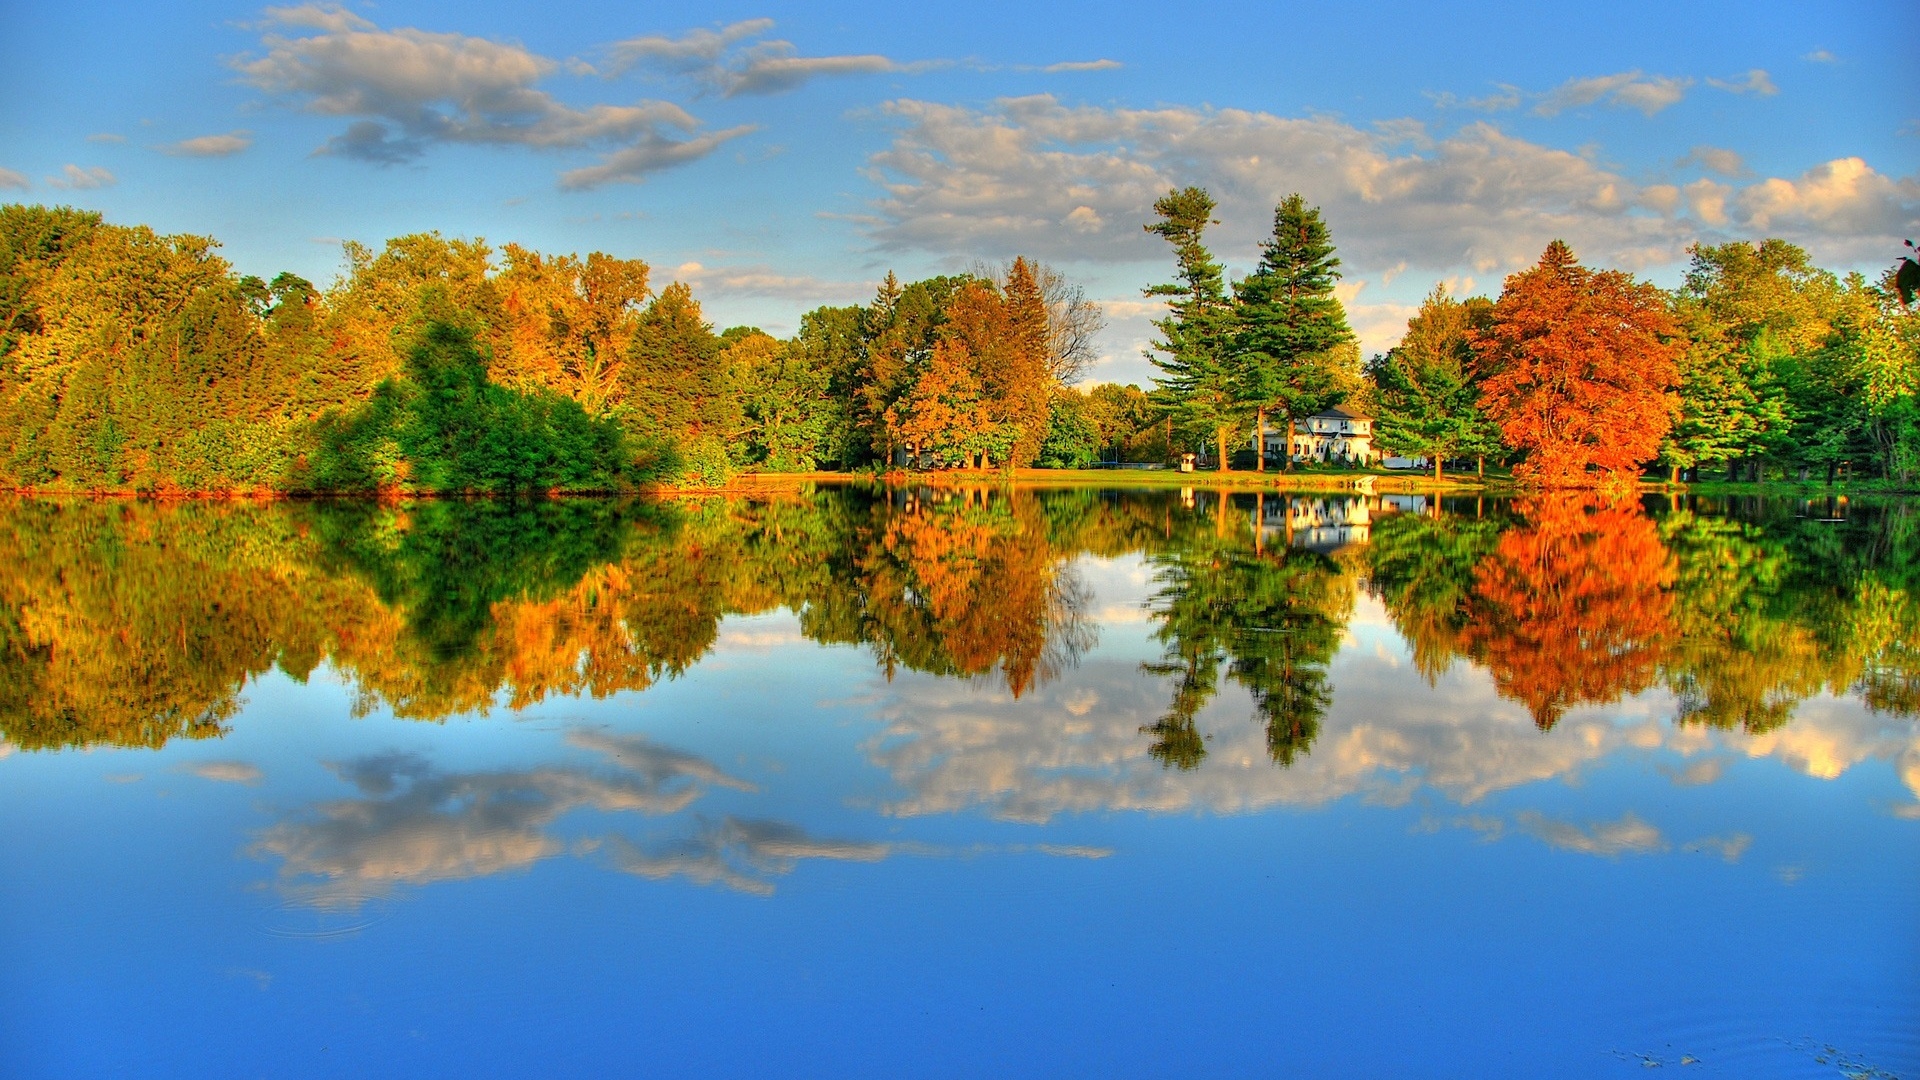 Amazing Autumn Landscape for 1920 x 1080 HDTV 1080p resolution